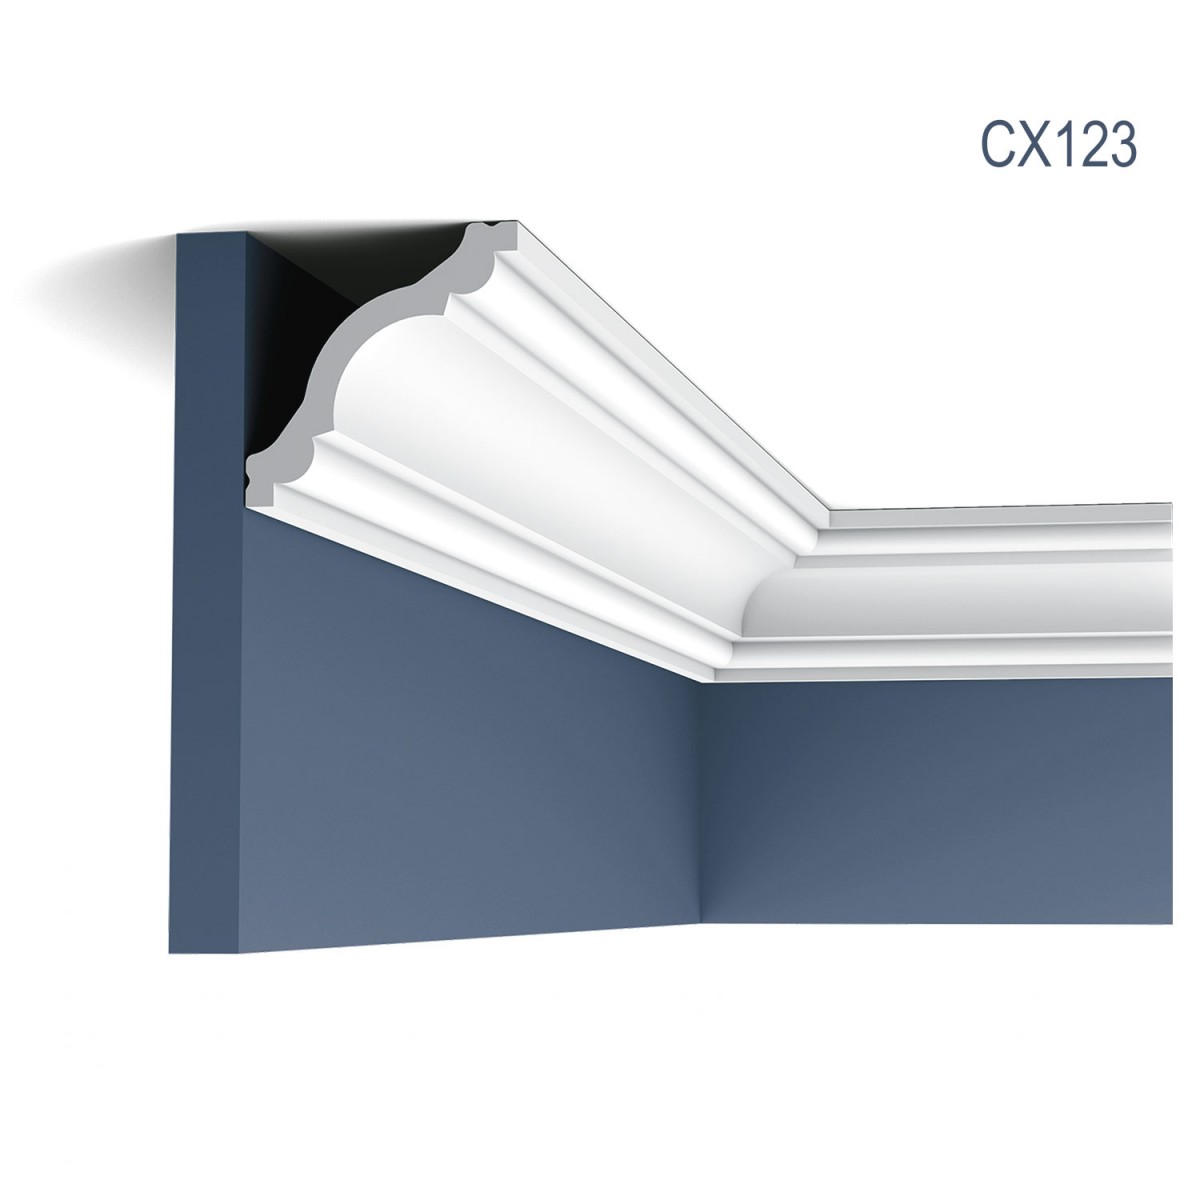 Cornisa Axxent CX123, Dimensiuni: 200 X 8 X 8 cm, Orac Decor, Cornișe tavan 